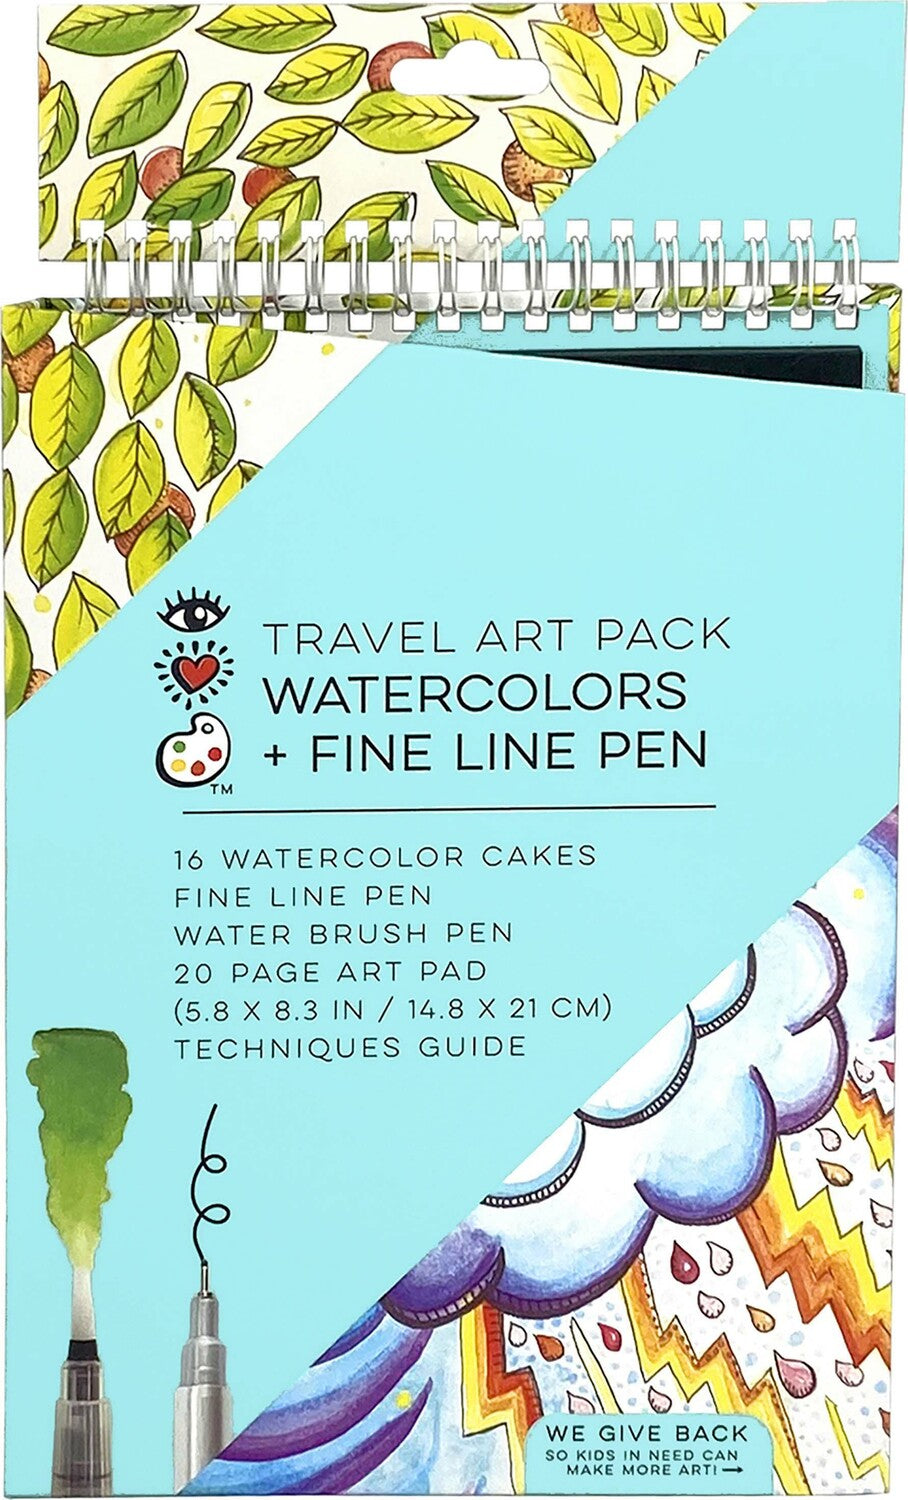 iHeartArt Mash-Up Art Pack Pastel FX, Bright Stripes